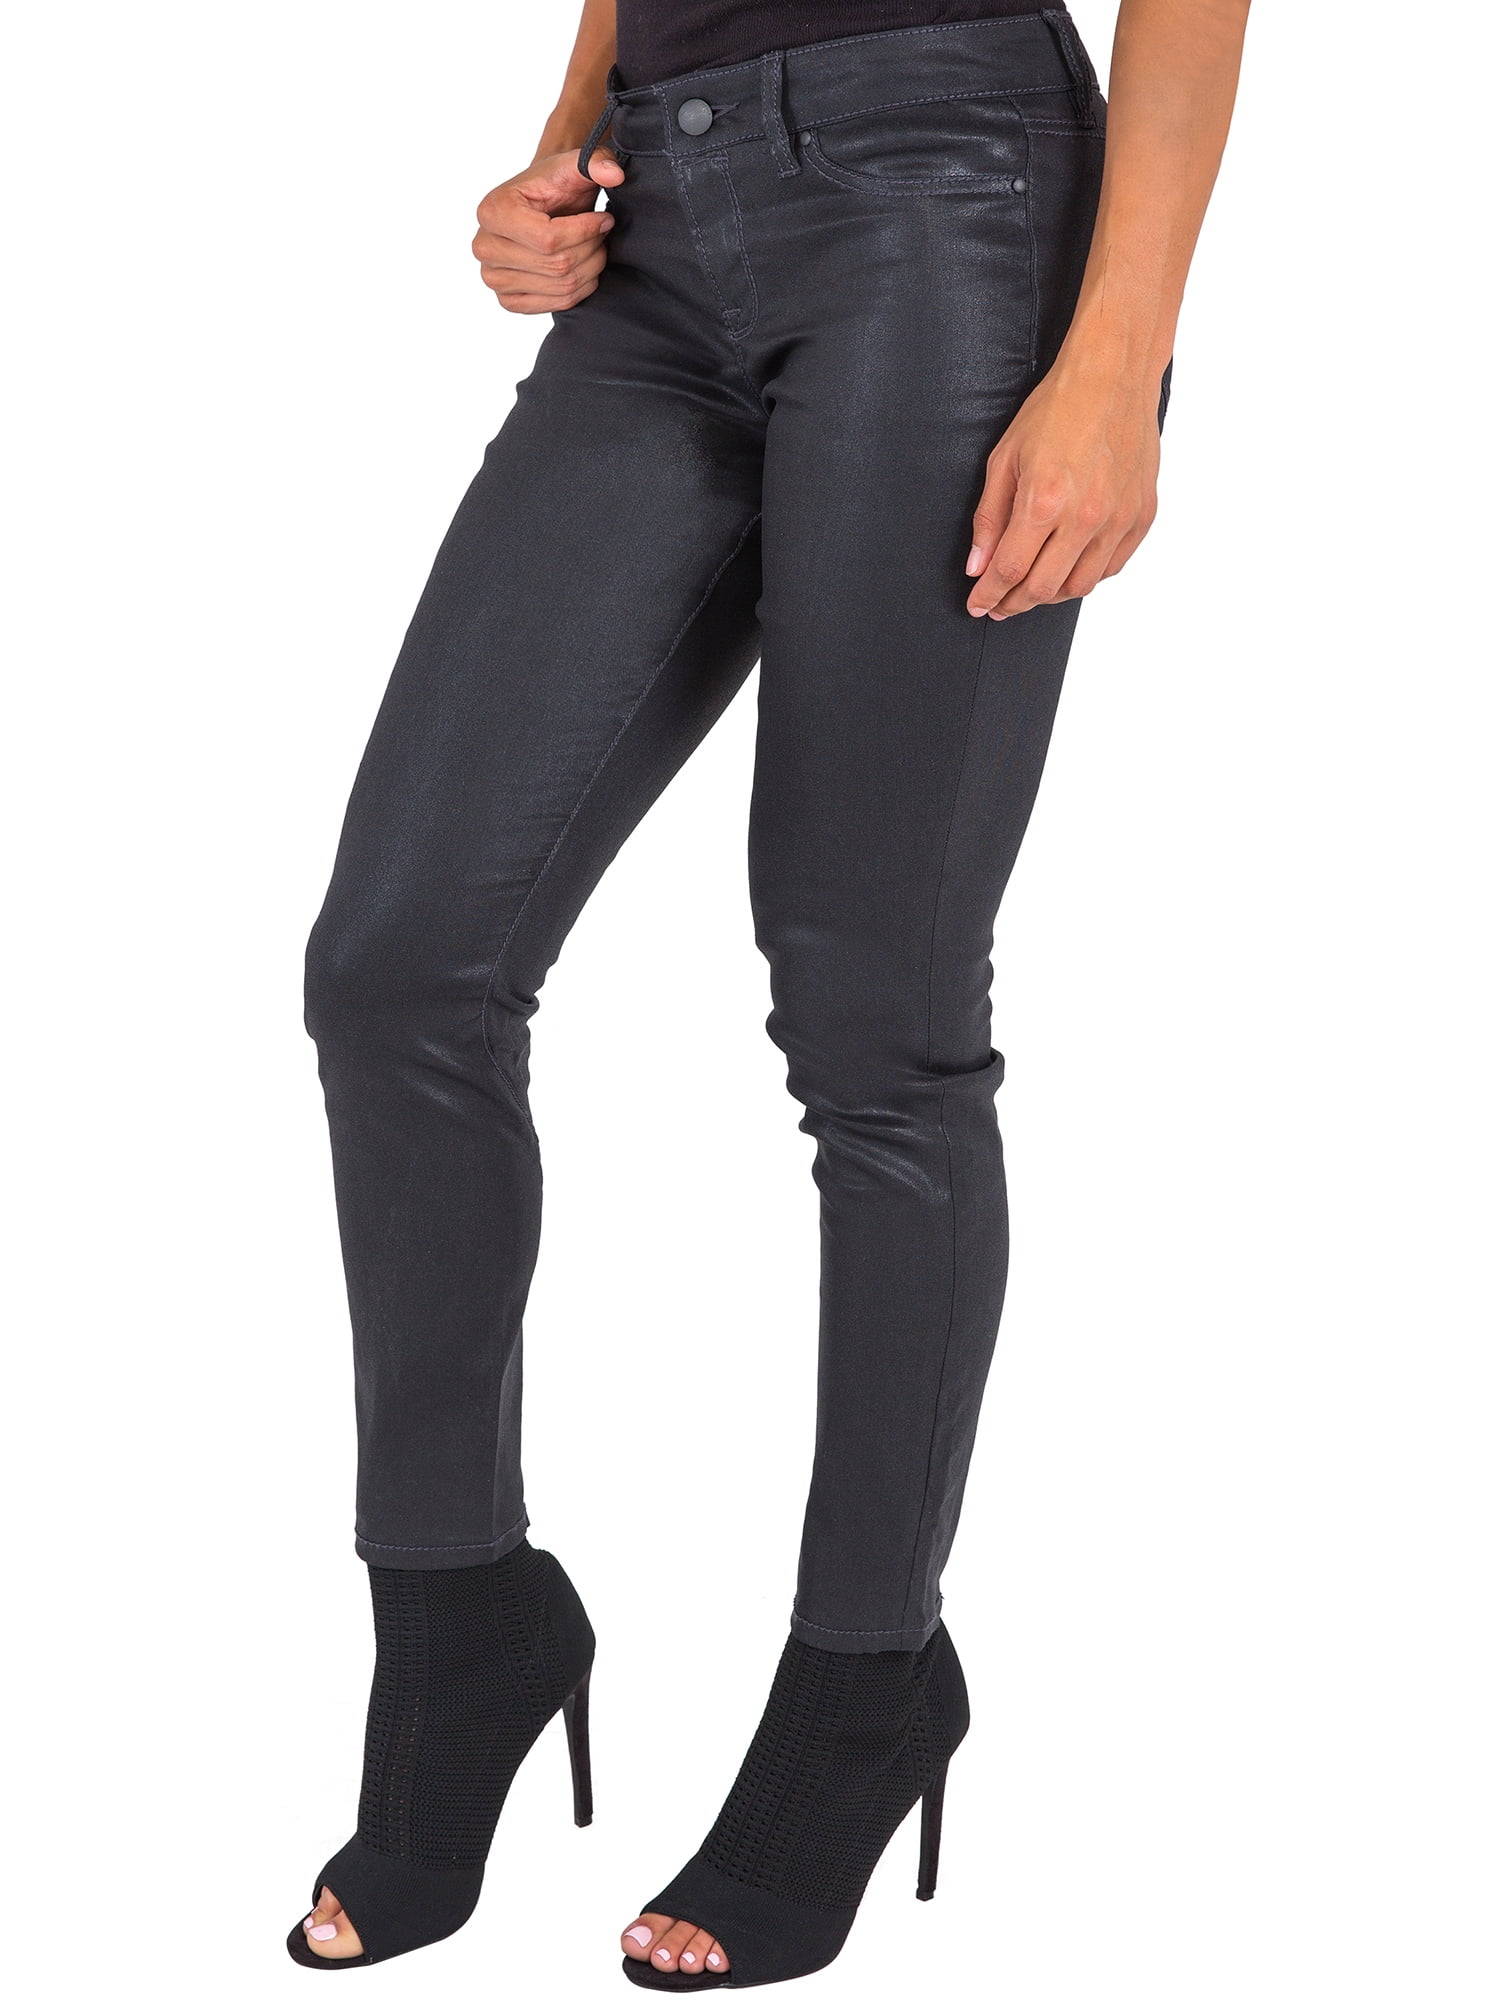 coated black jeans women's